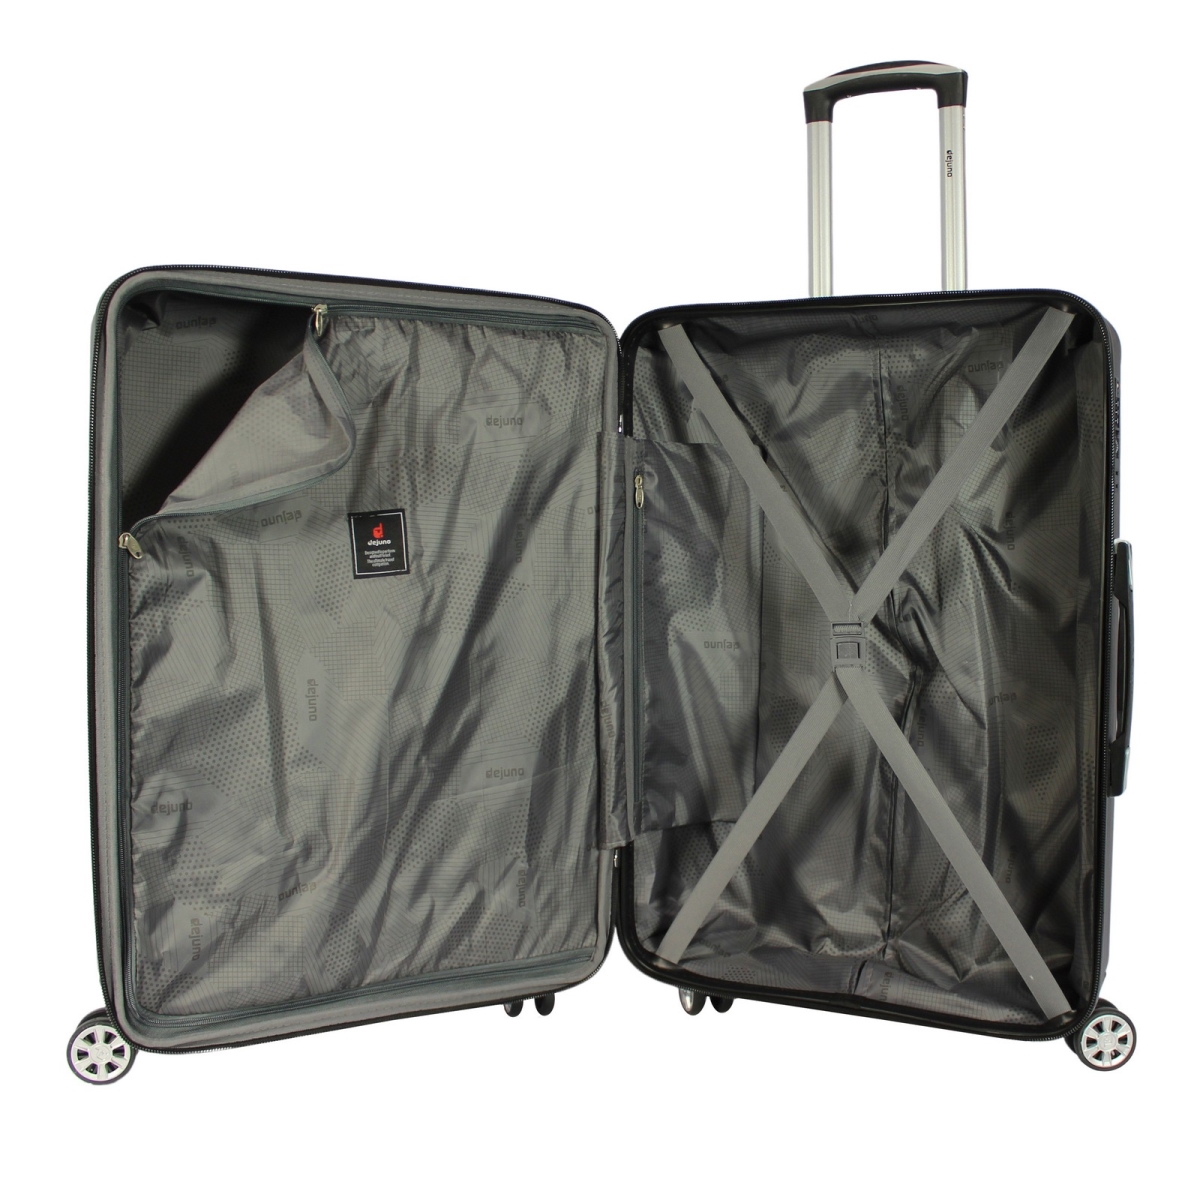 Picture of Dejuno 252015DJ-OLIVE Tutin Hardside Spinner Luggage Set with TSA Lock, Olive - 3 Piece